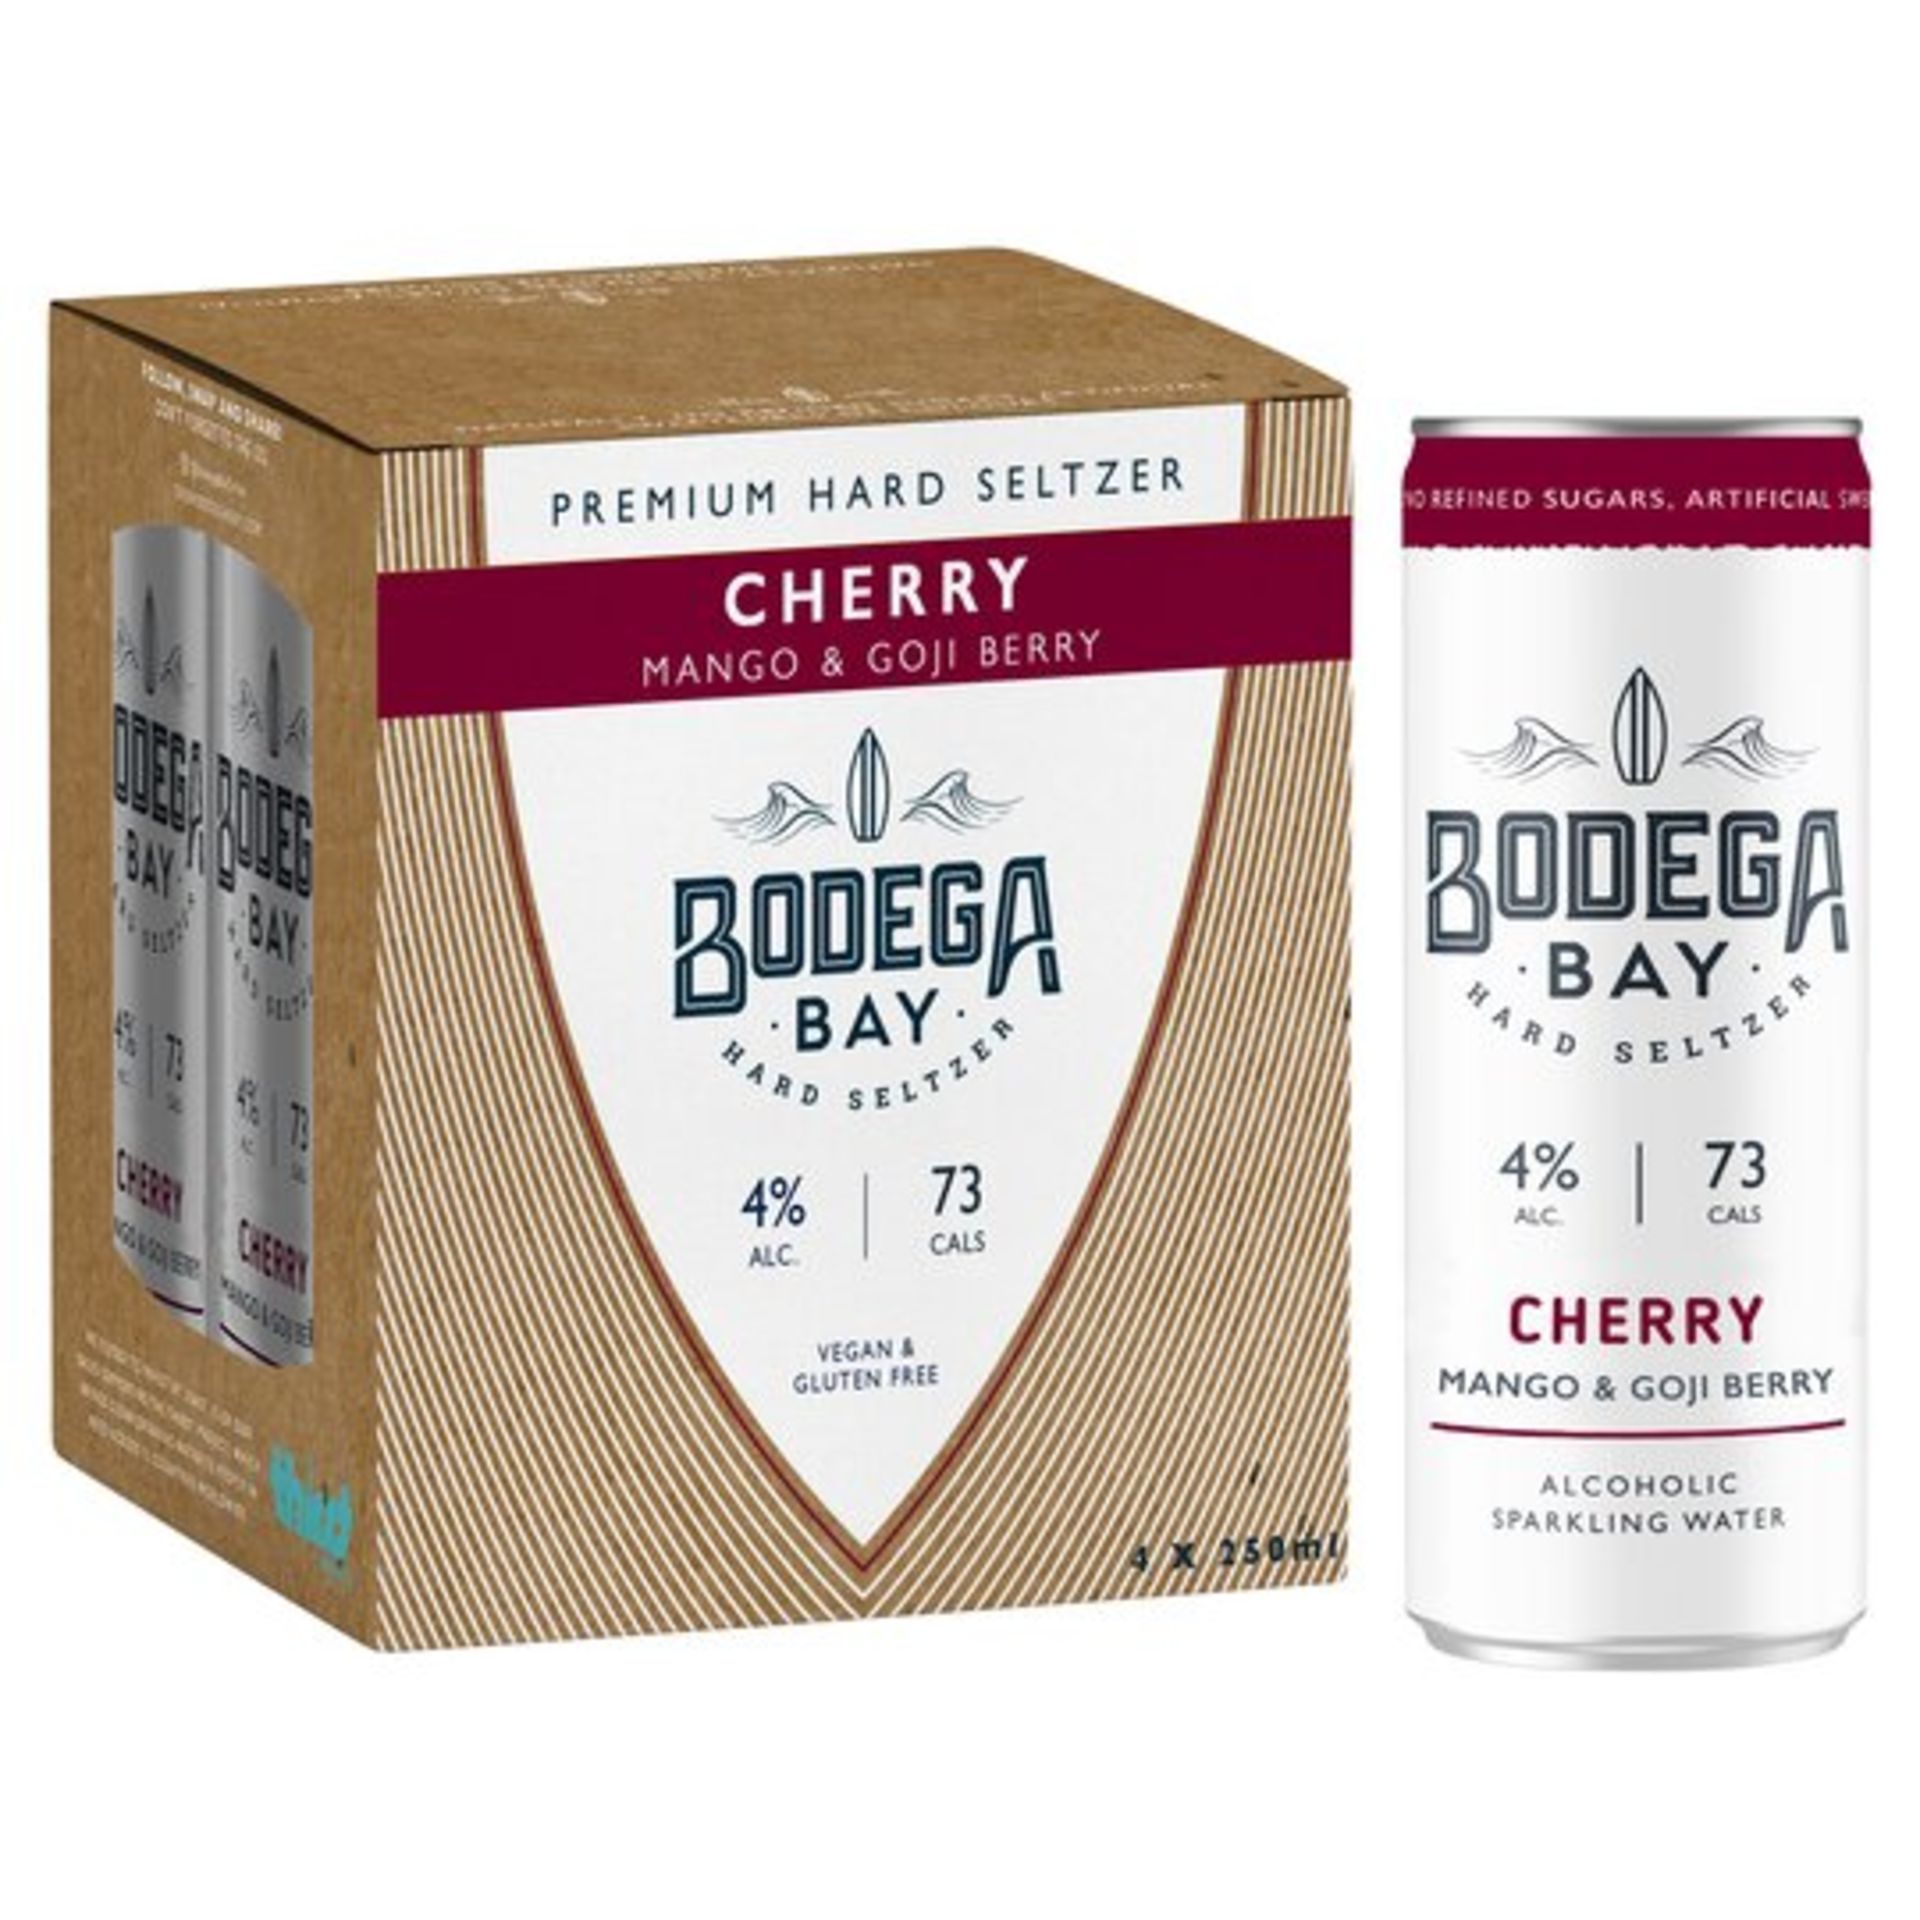 24 x Bodega Bay Hard Seltzer 250ml Alcoholic Sparkling Water Drinks - Cherry Mango & Goji Berry - 4% - Image 4 of 8